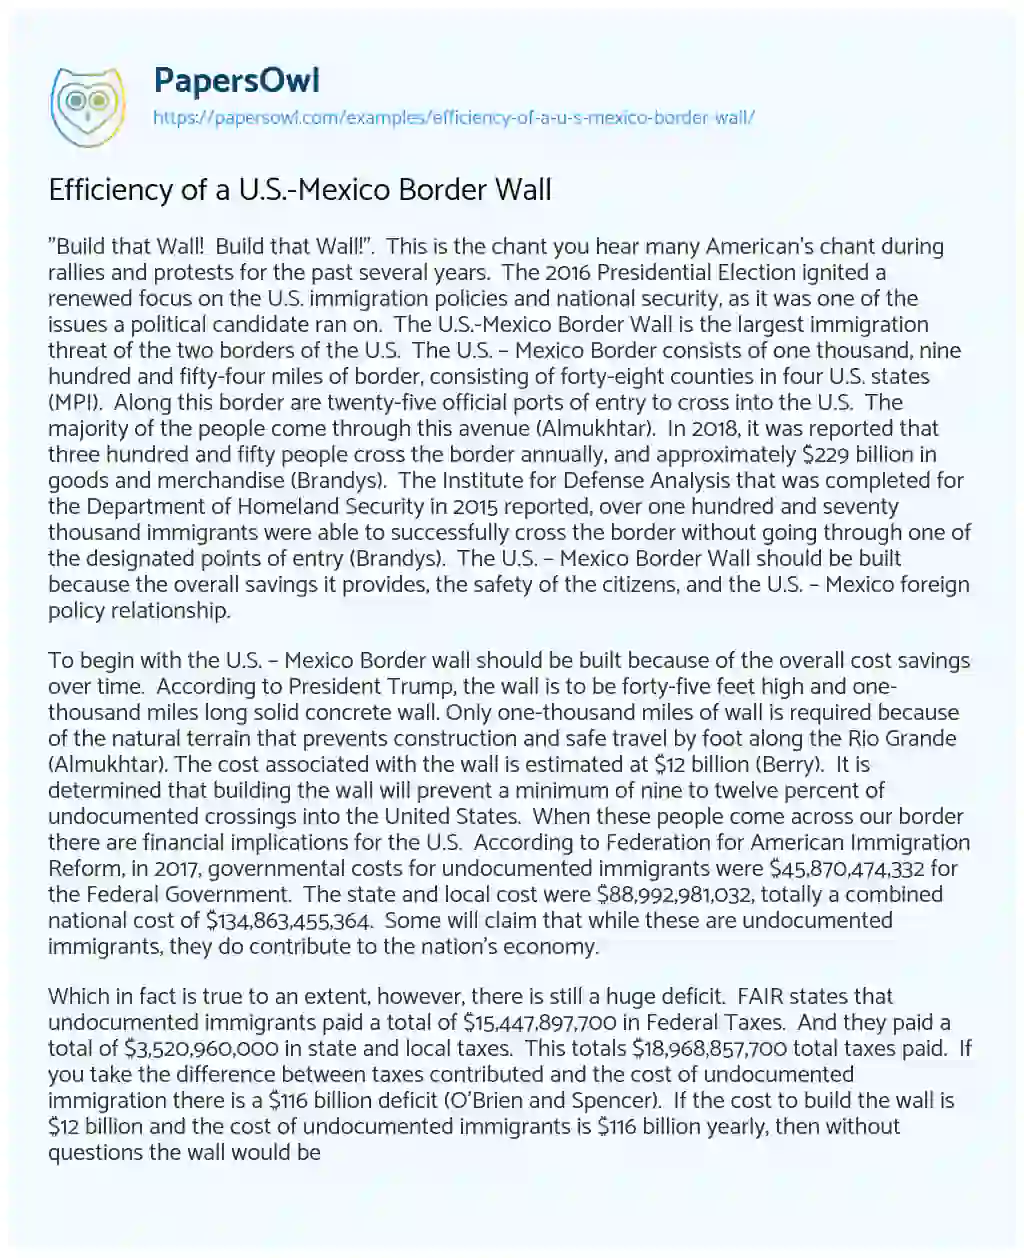 Essay on Efficiency of a U.S.-Mexico Border Wall